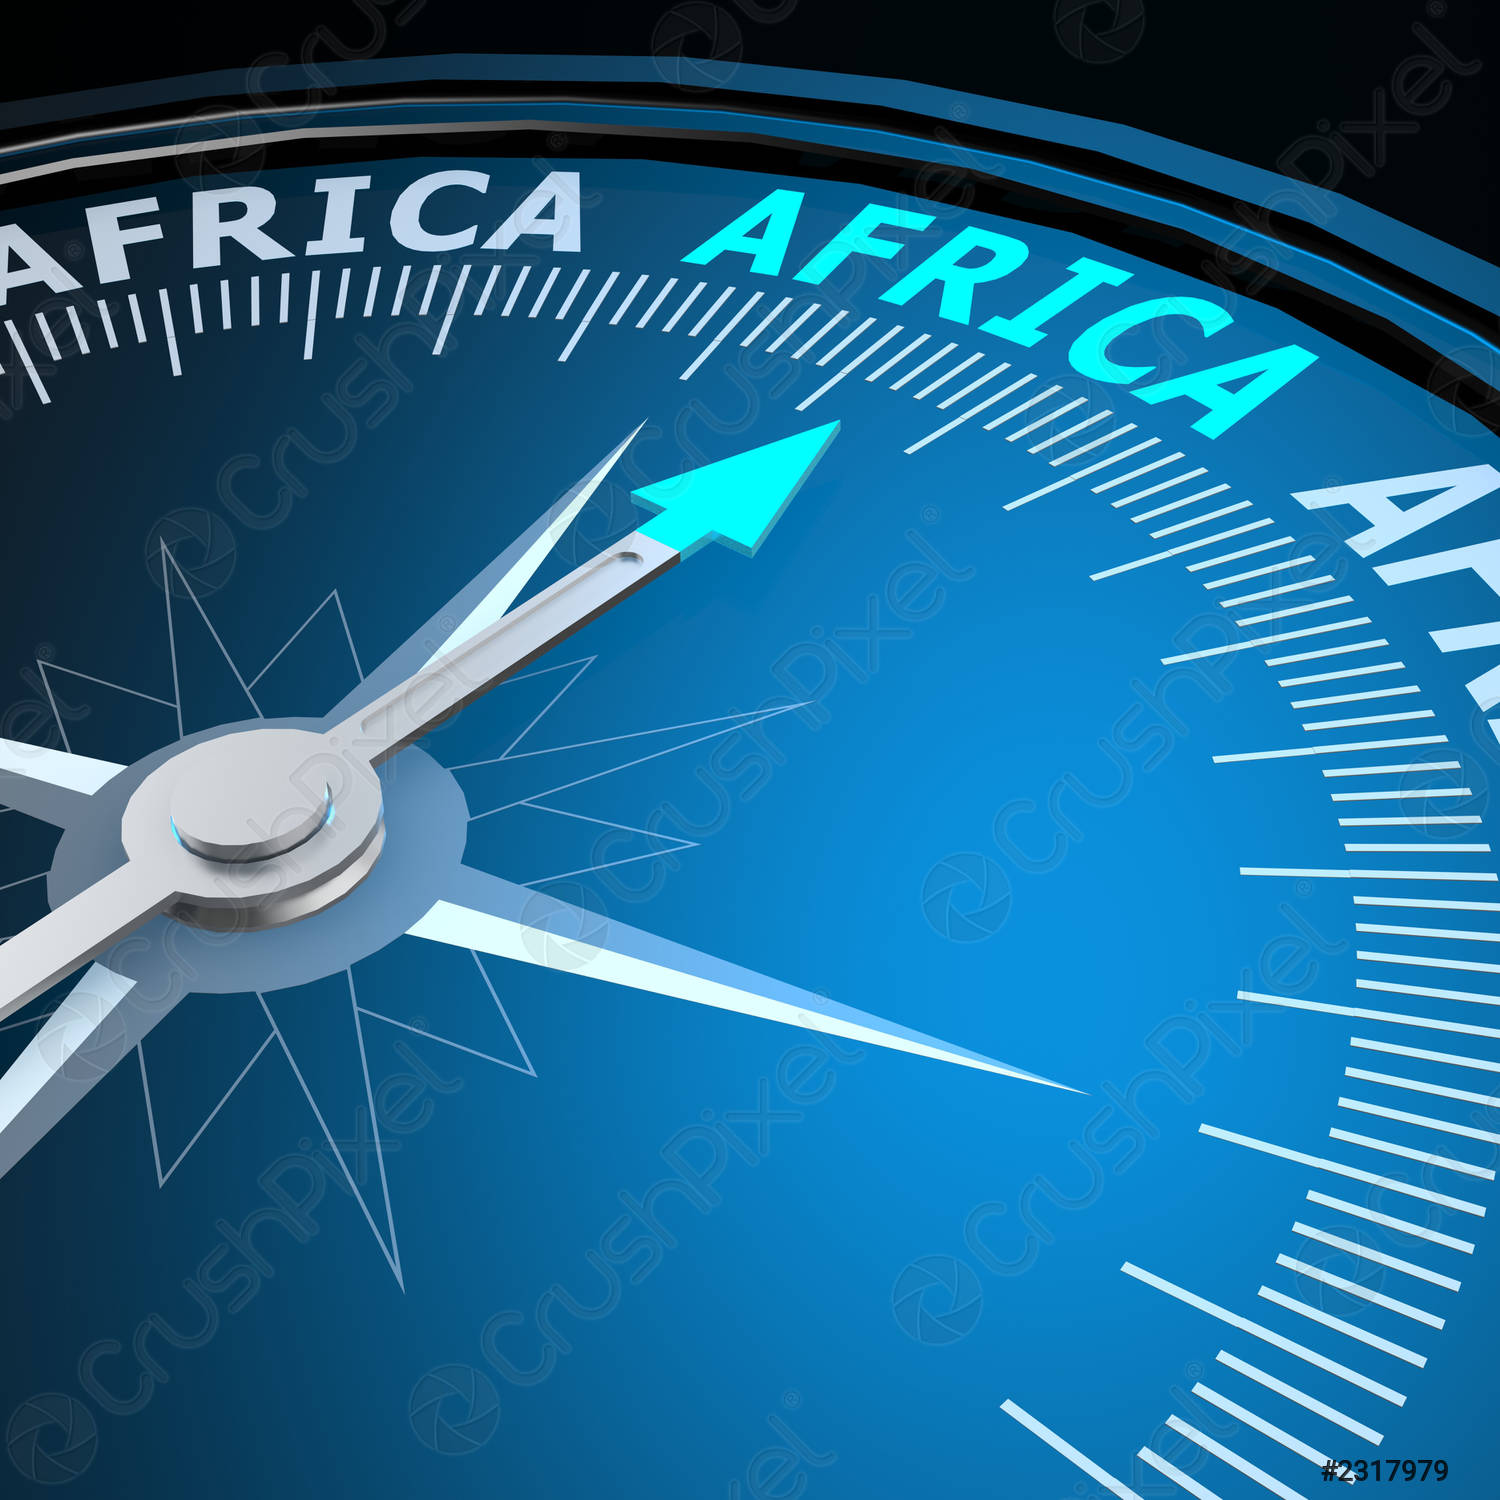 africa-word-on-compass-2317979.jpg